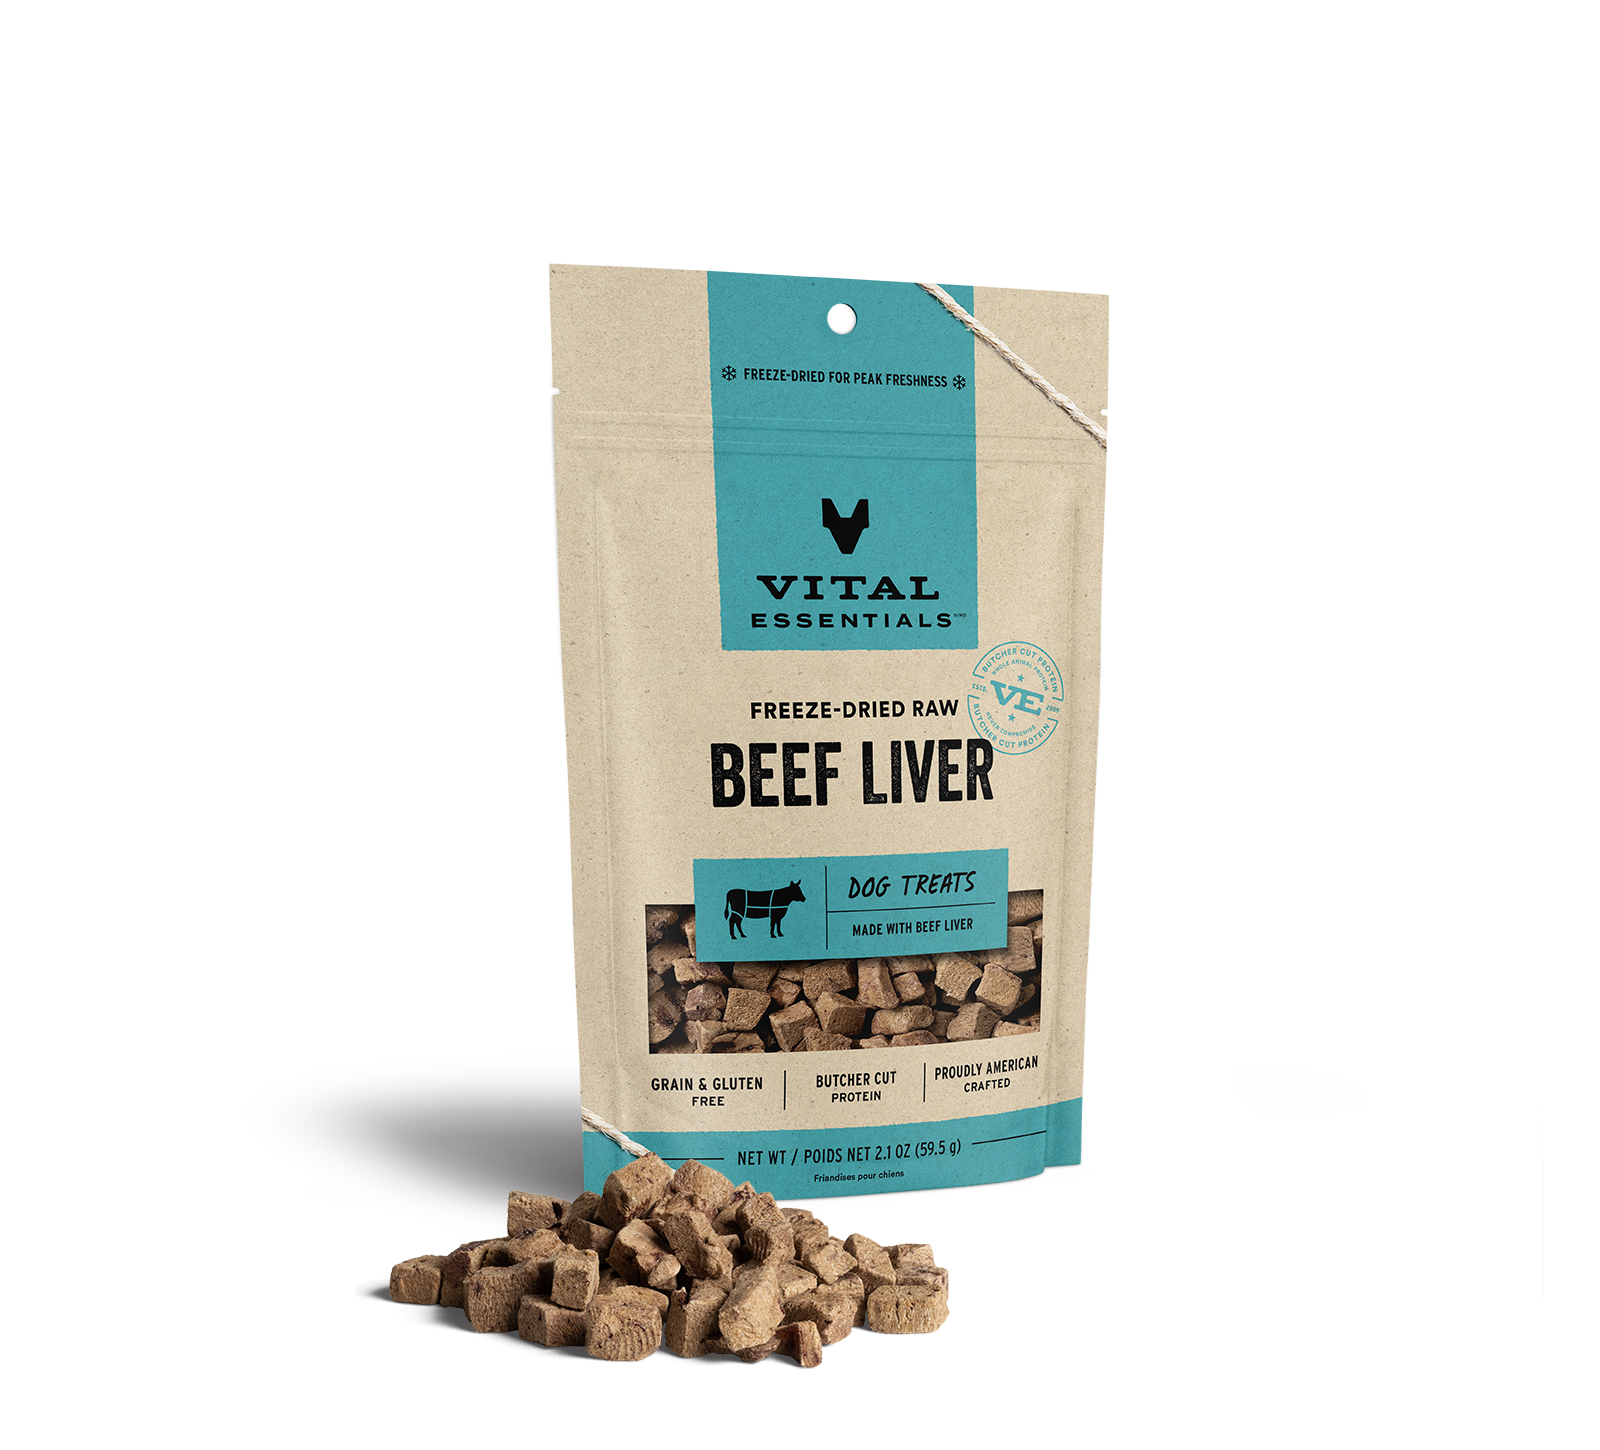 Vital Essentials Freeze-Dried Beef Liver Dog Treats, 2.1 oz - Health/First Aid